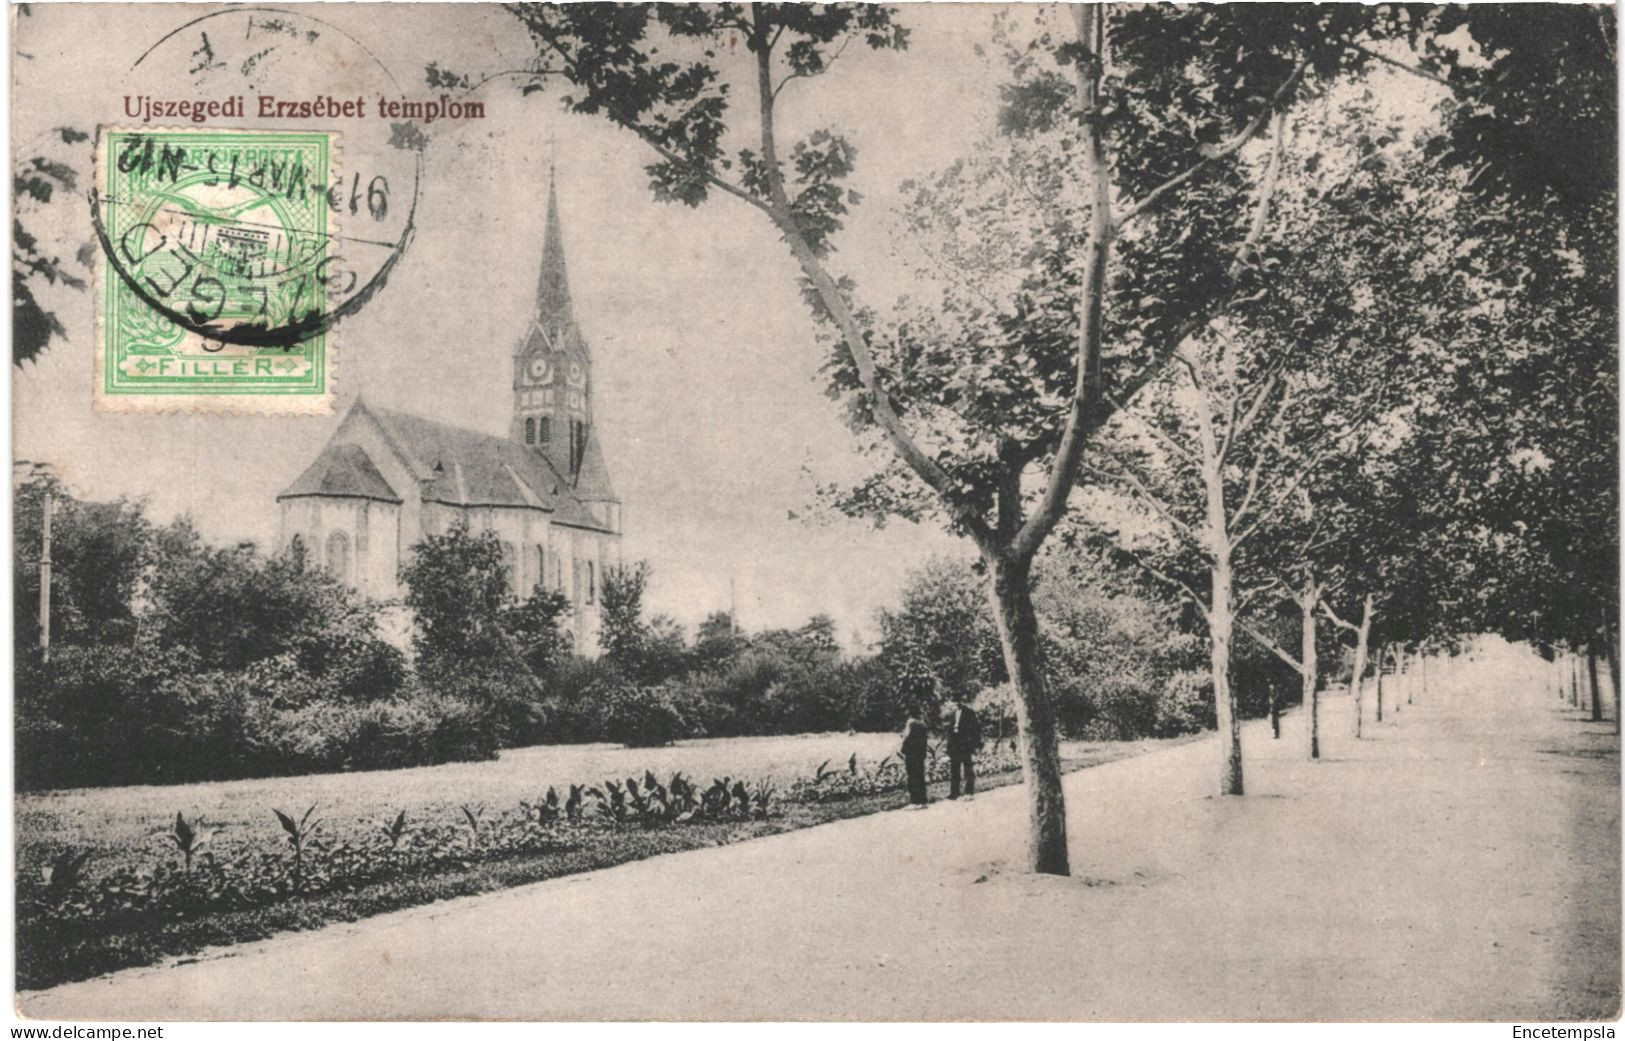 CPA Carte Postale Hongrie Szeged Ujszegedi Erzsébet Templom VM80825ok - Hungary